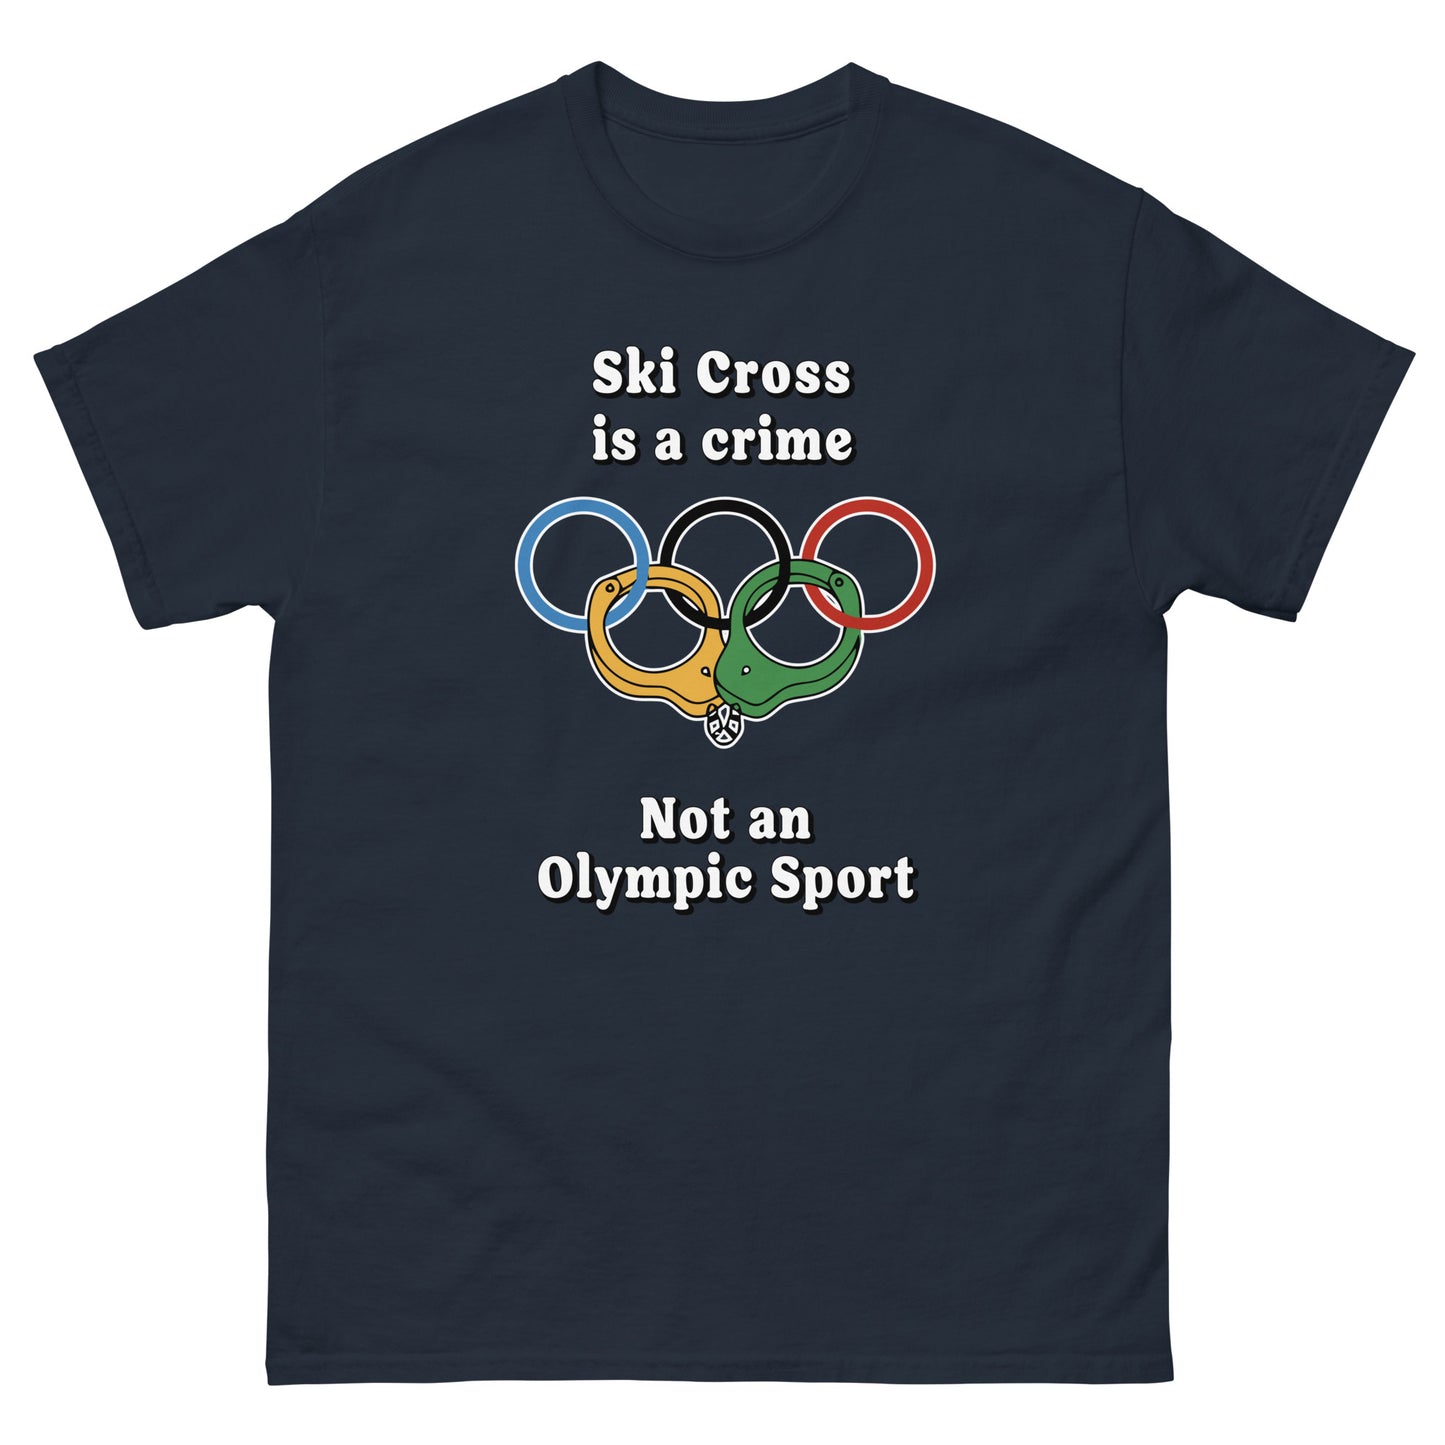 Ski Cross is a Crime T-shirt